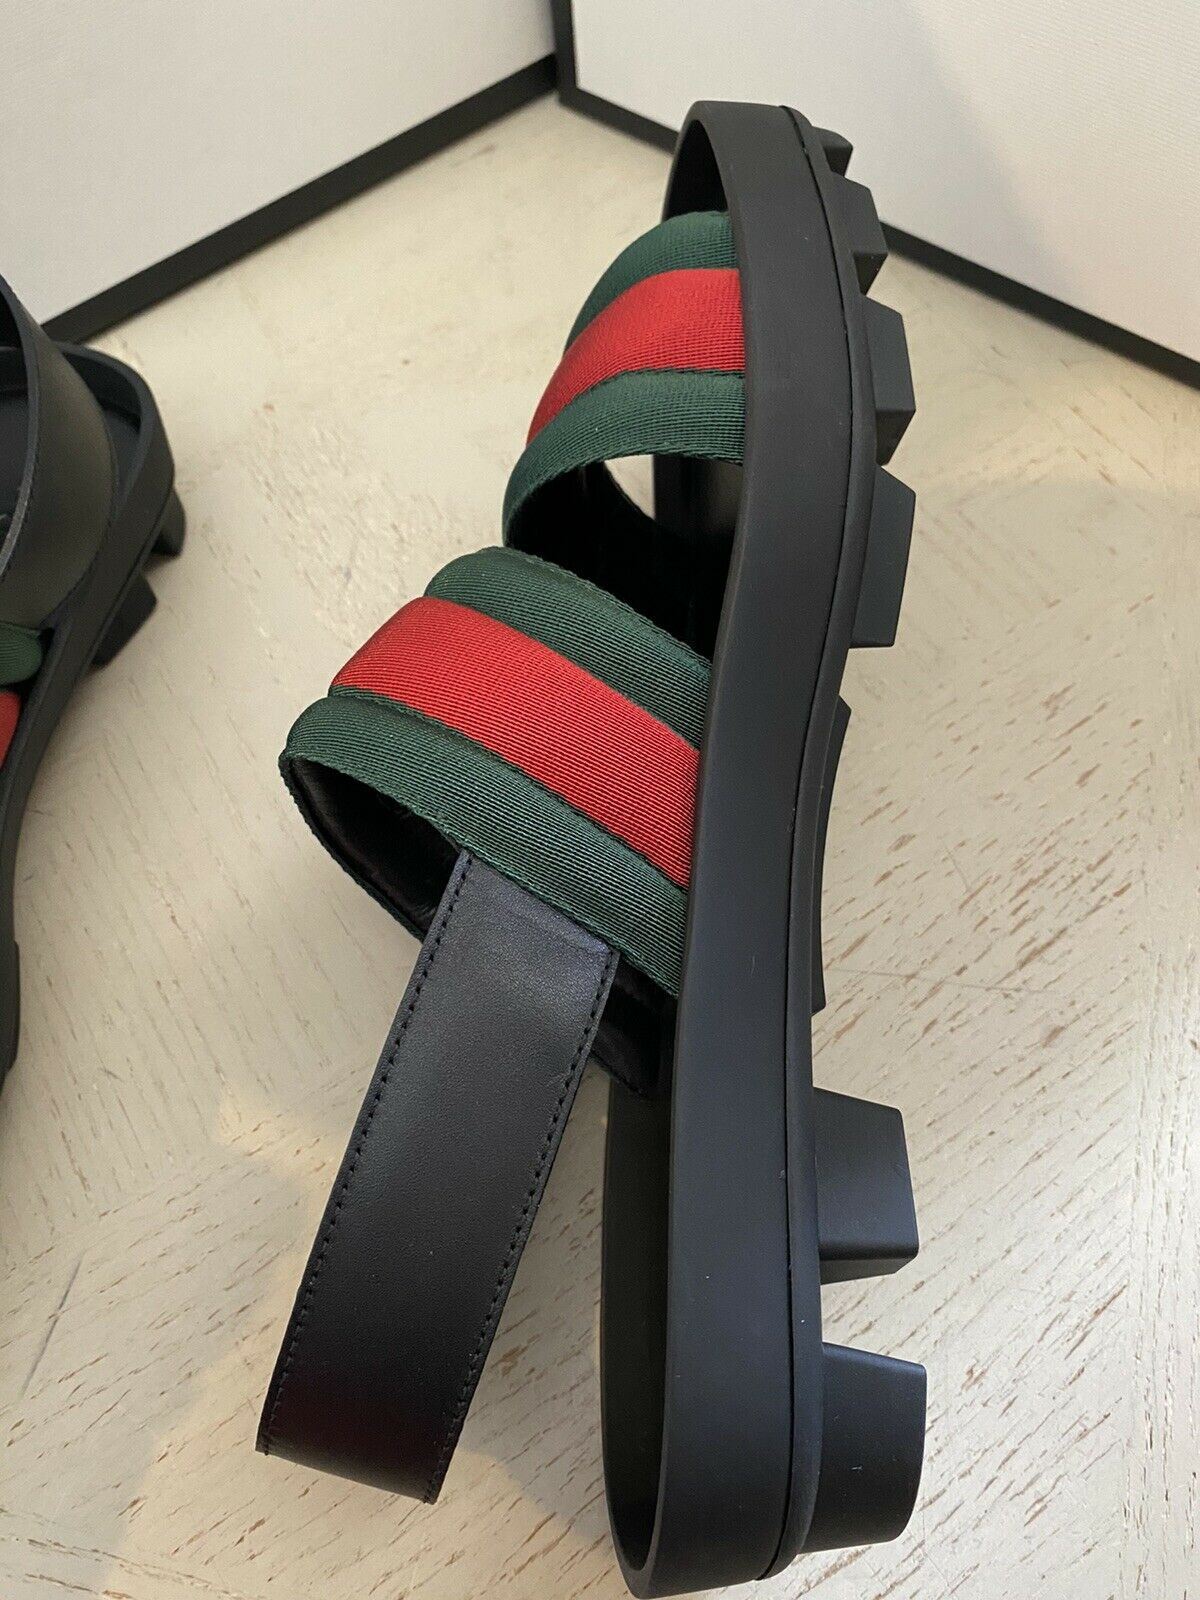 NIB Gucci Mens Sandal Shoes Green/Red/Black 9 US/8 UK Italy